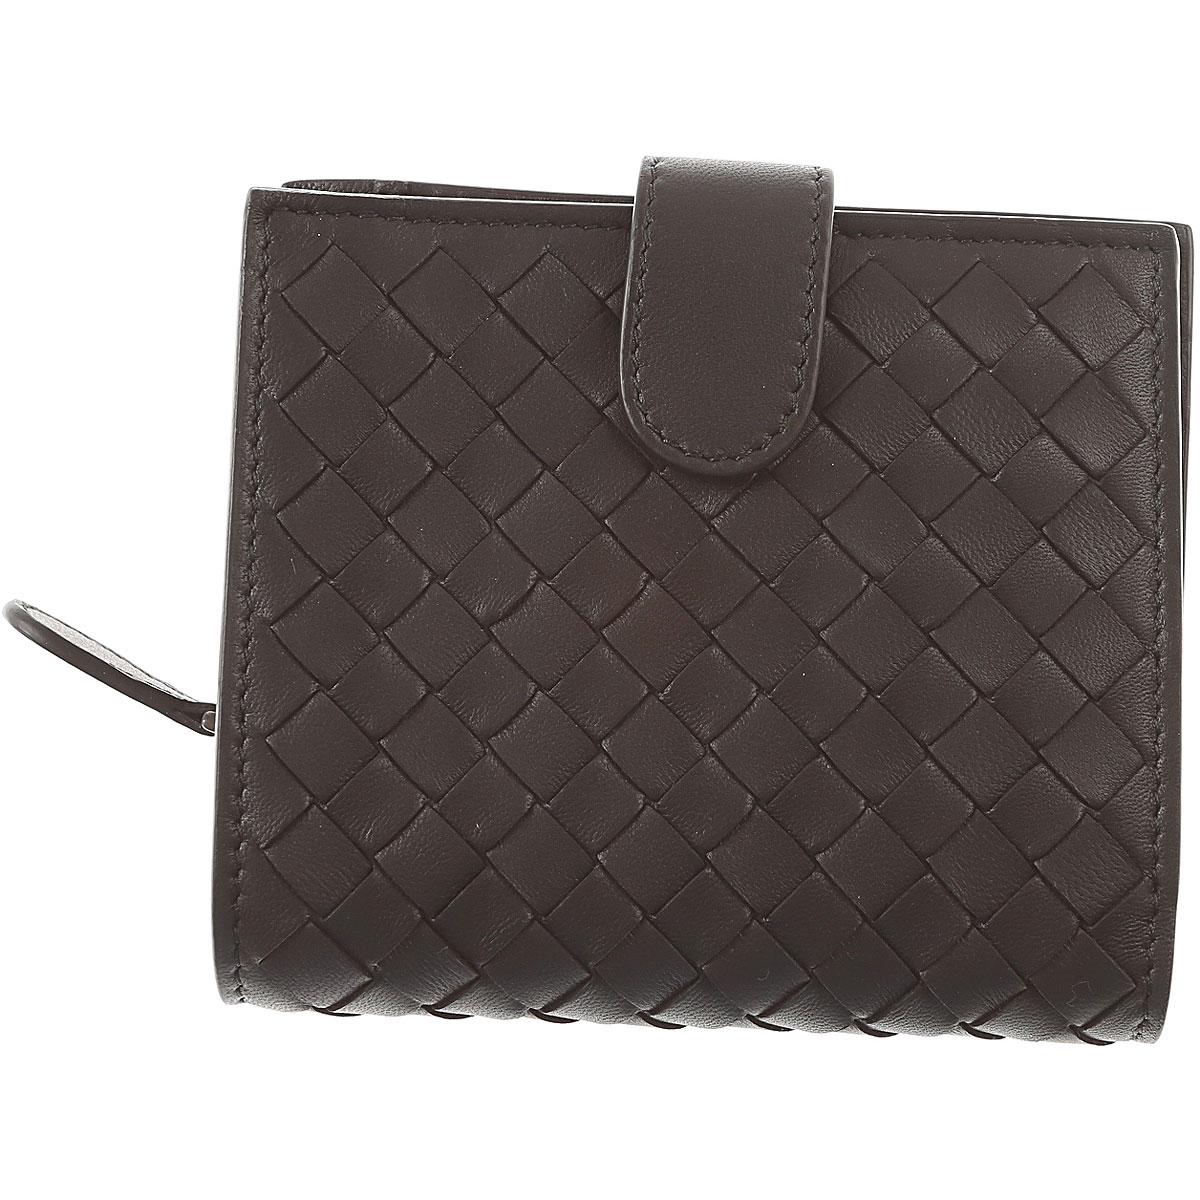 Bottega Veneta Wallet For Women On Sale in Black - Lyst